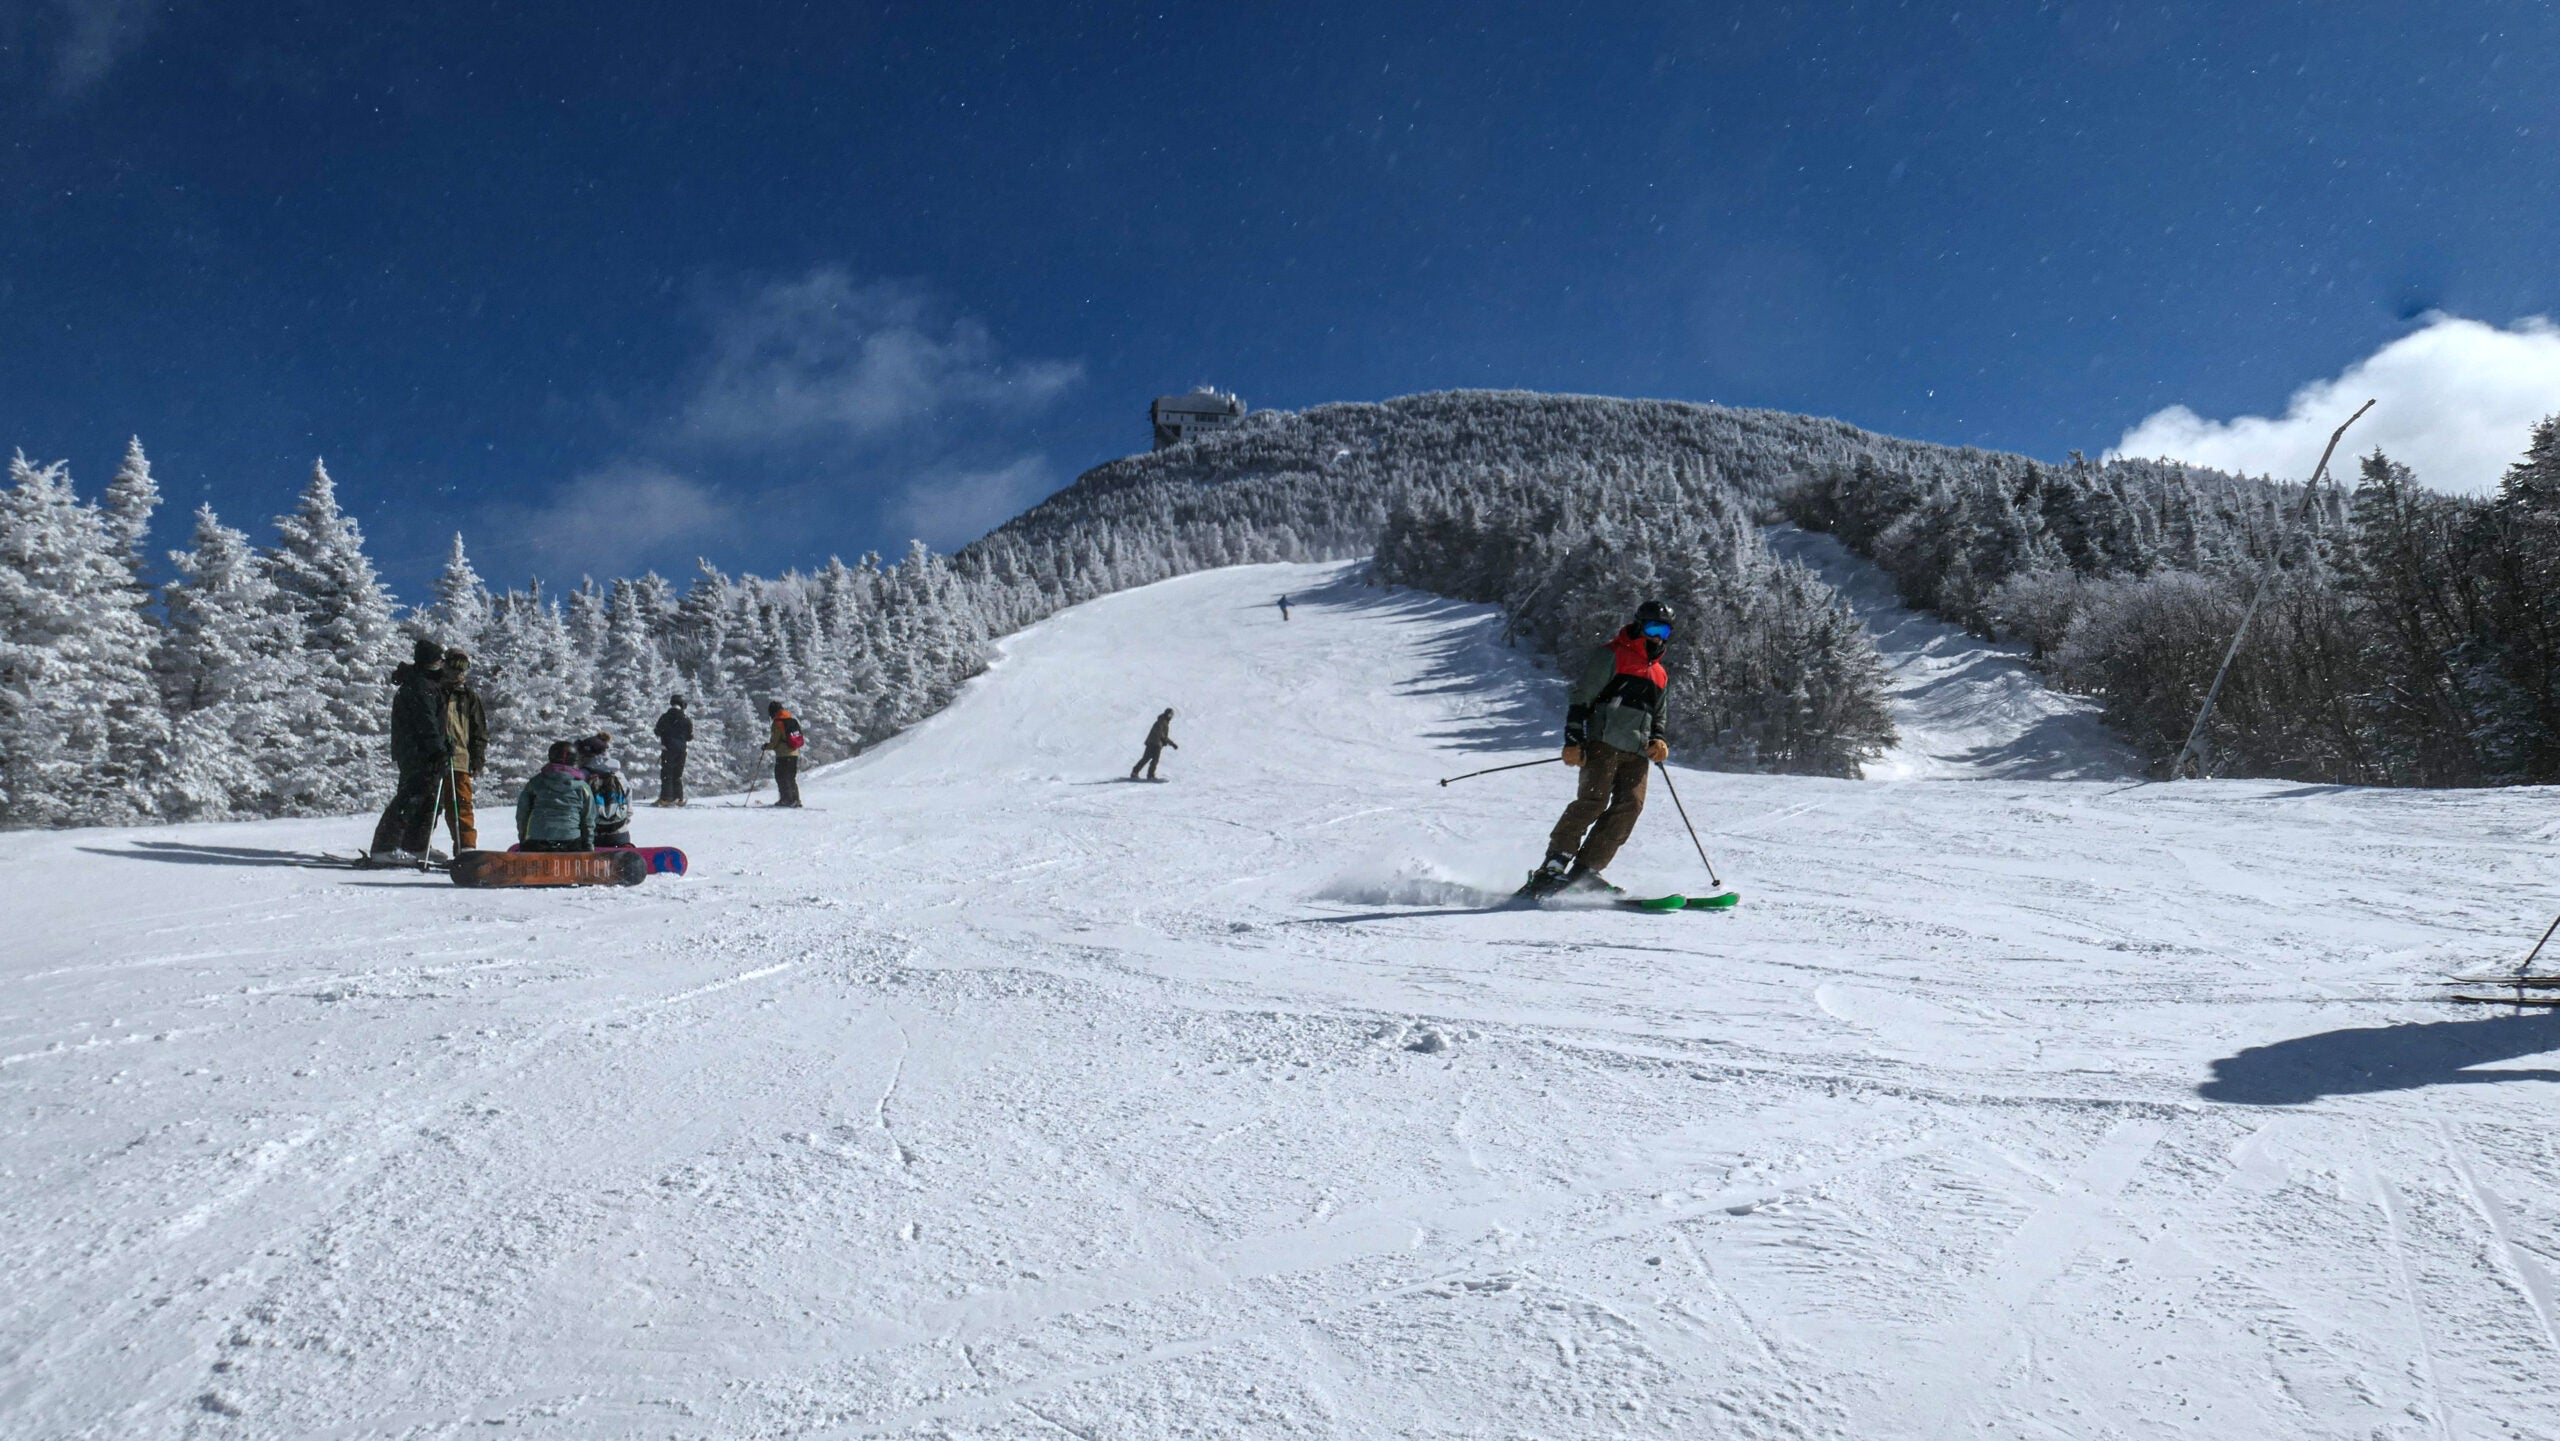 Do you plan to ski or snowboard this season? Let us know.